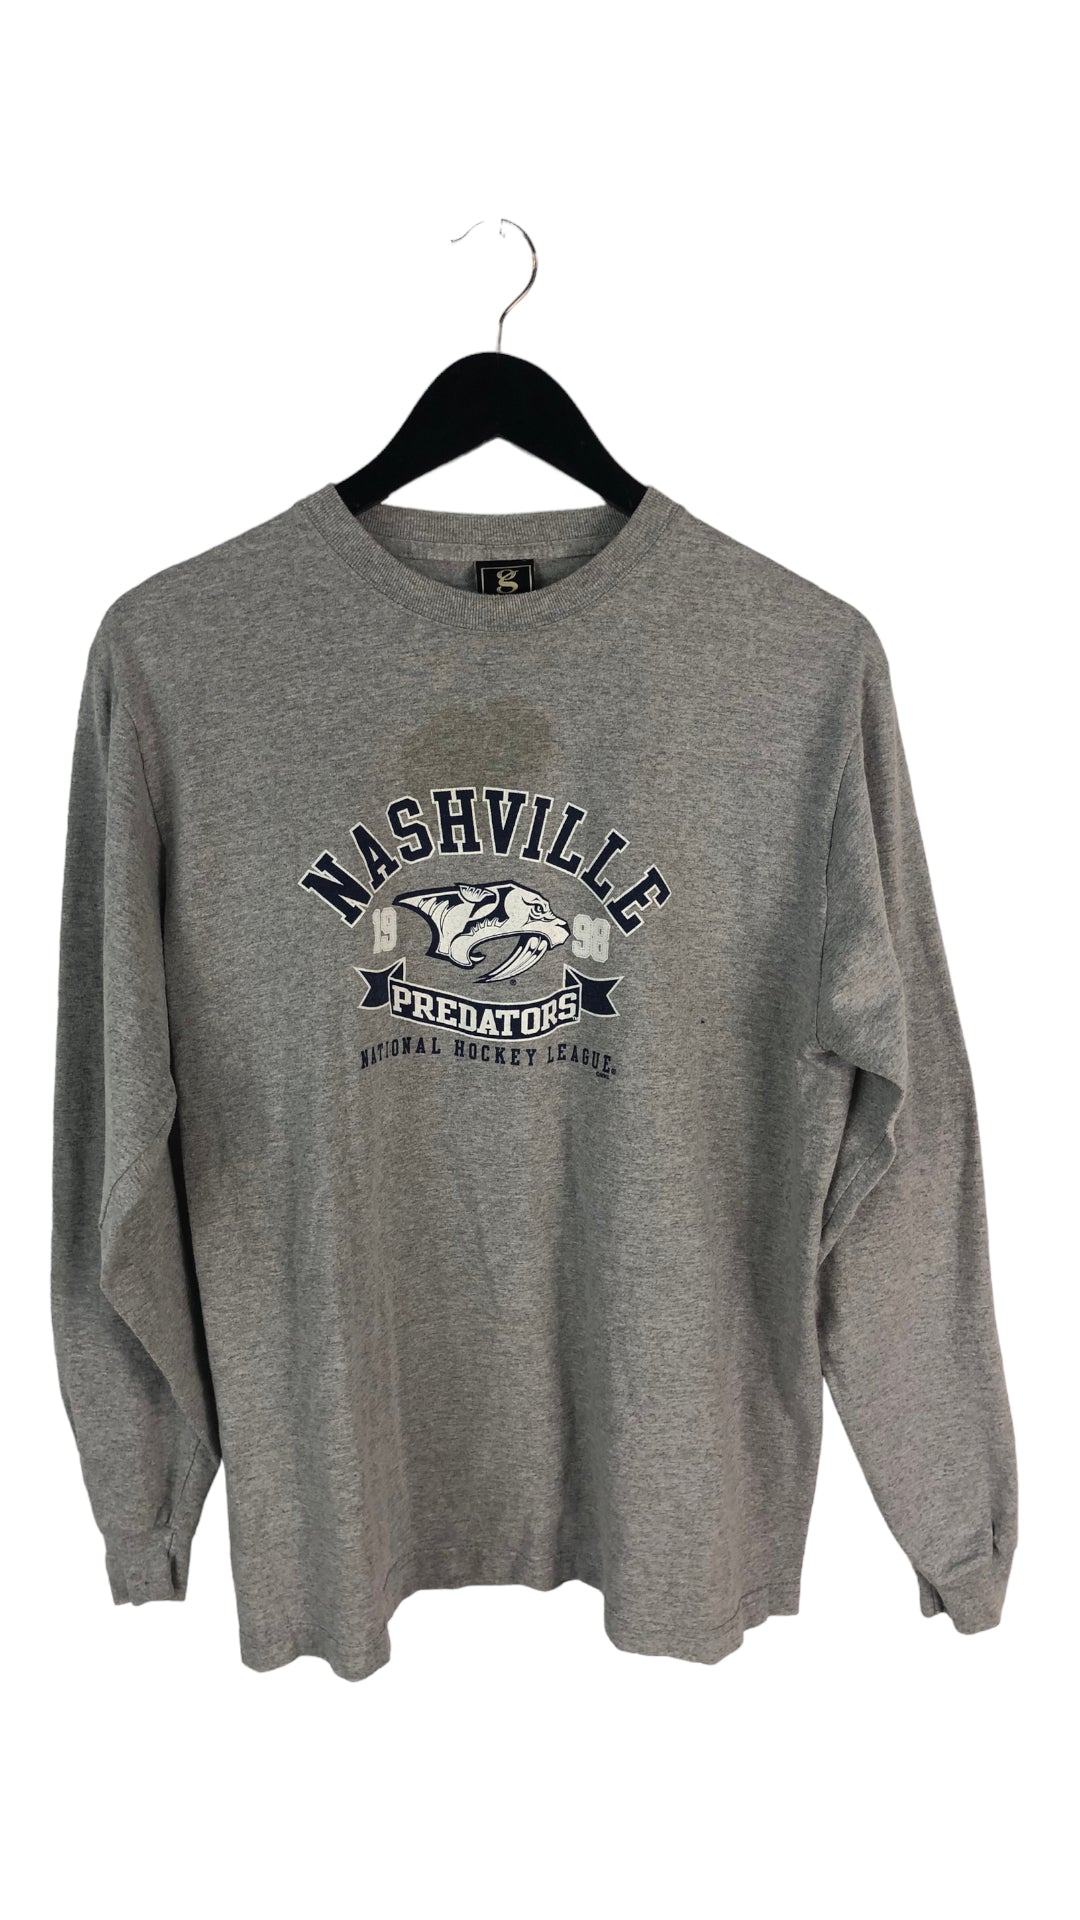 Load image into Gallery viewer, VTG Nashville Predators Grey L/S Shirt Sz M
